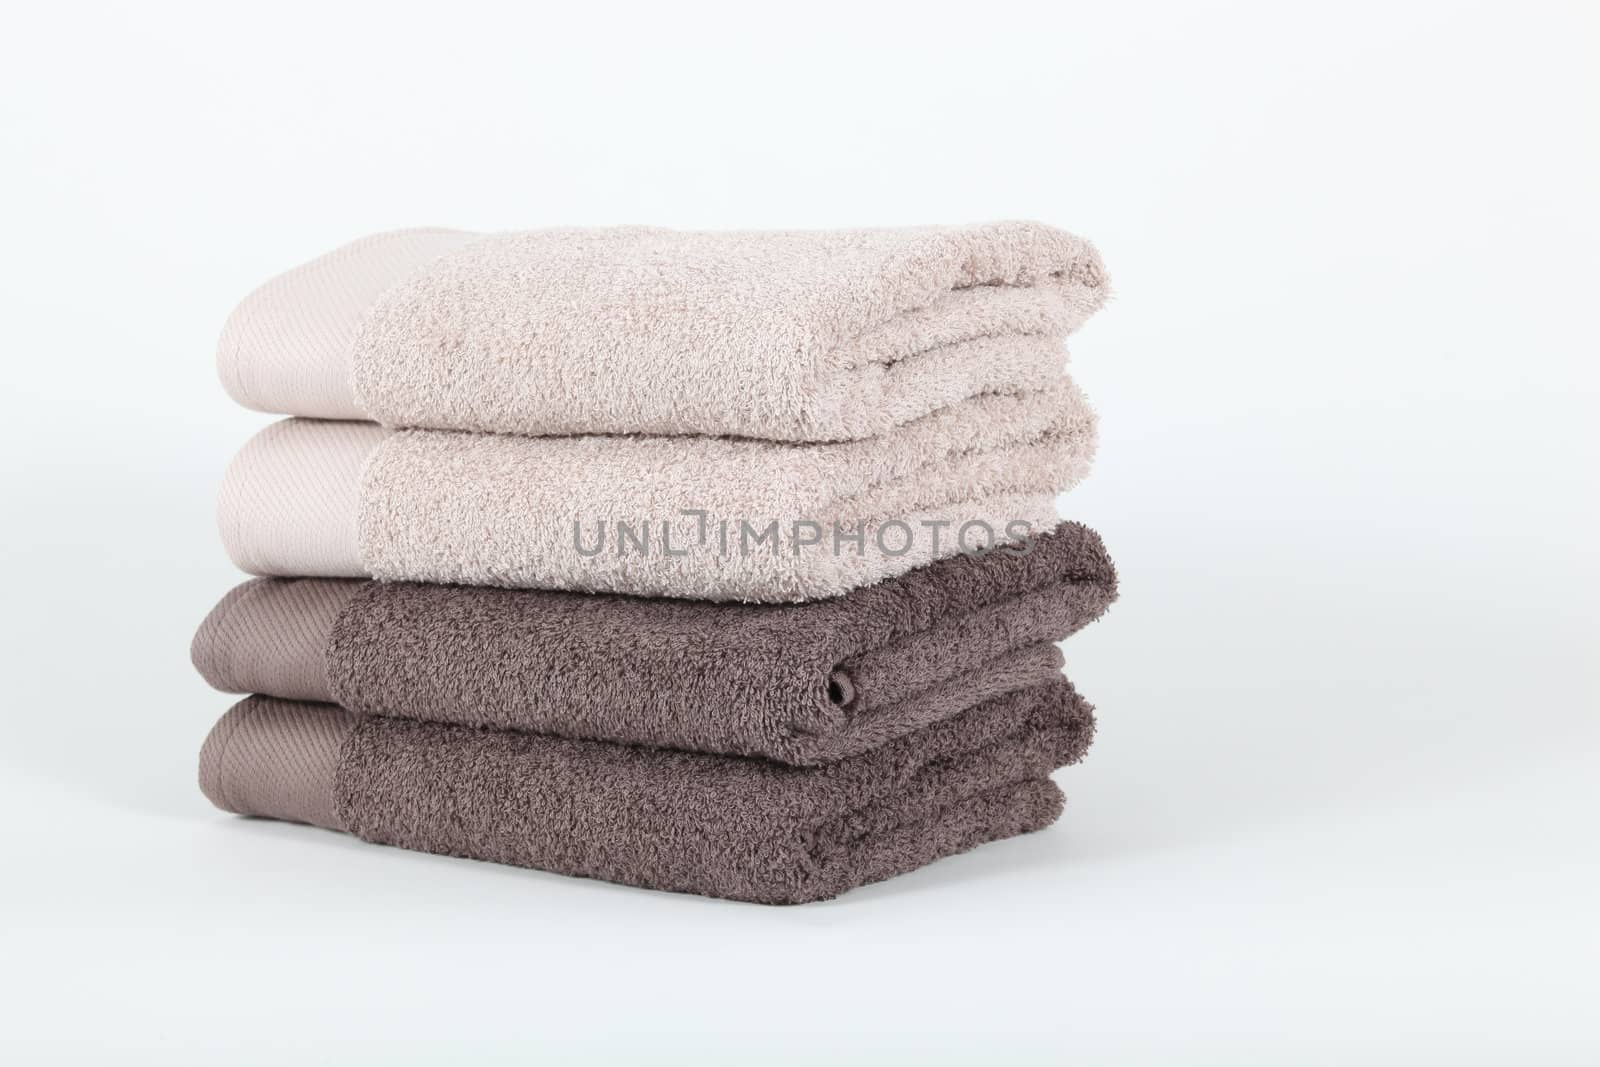 Neatly folded towels